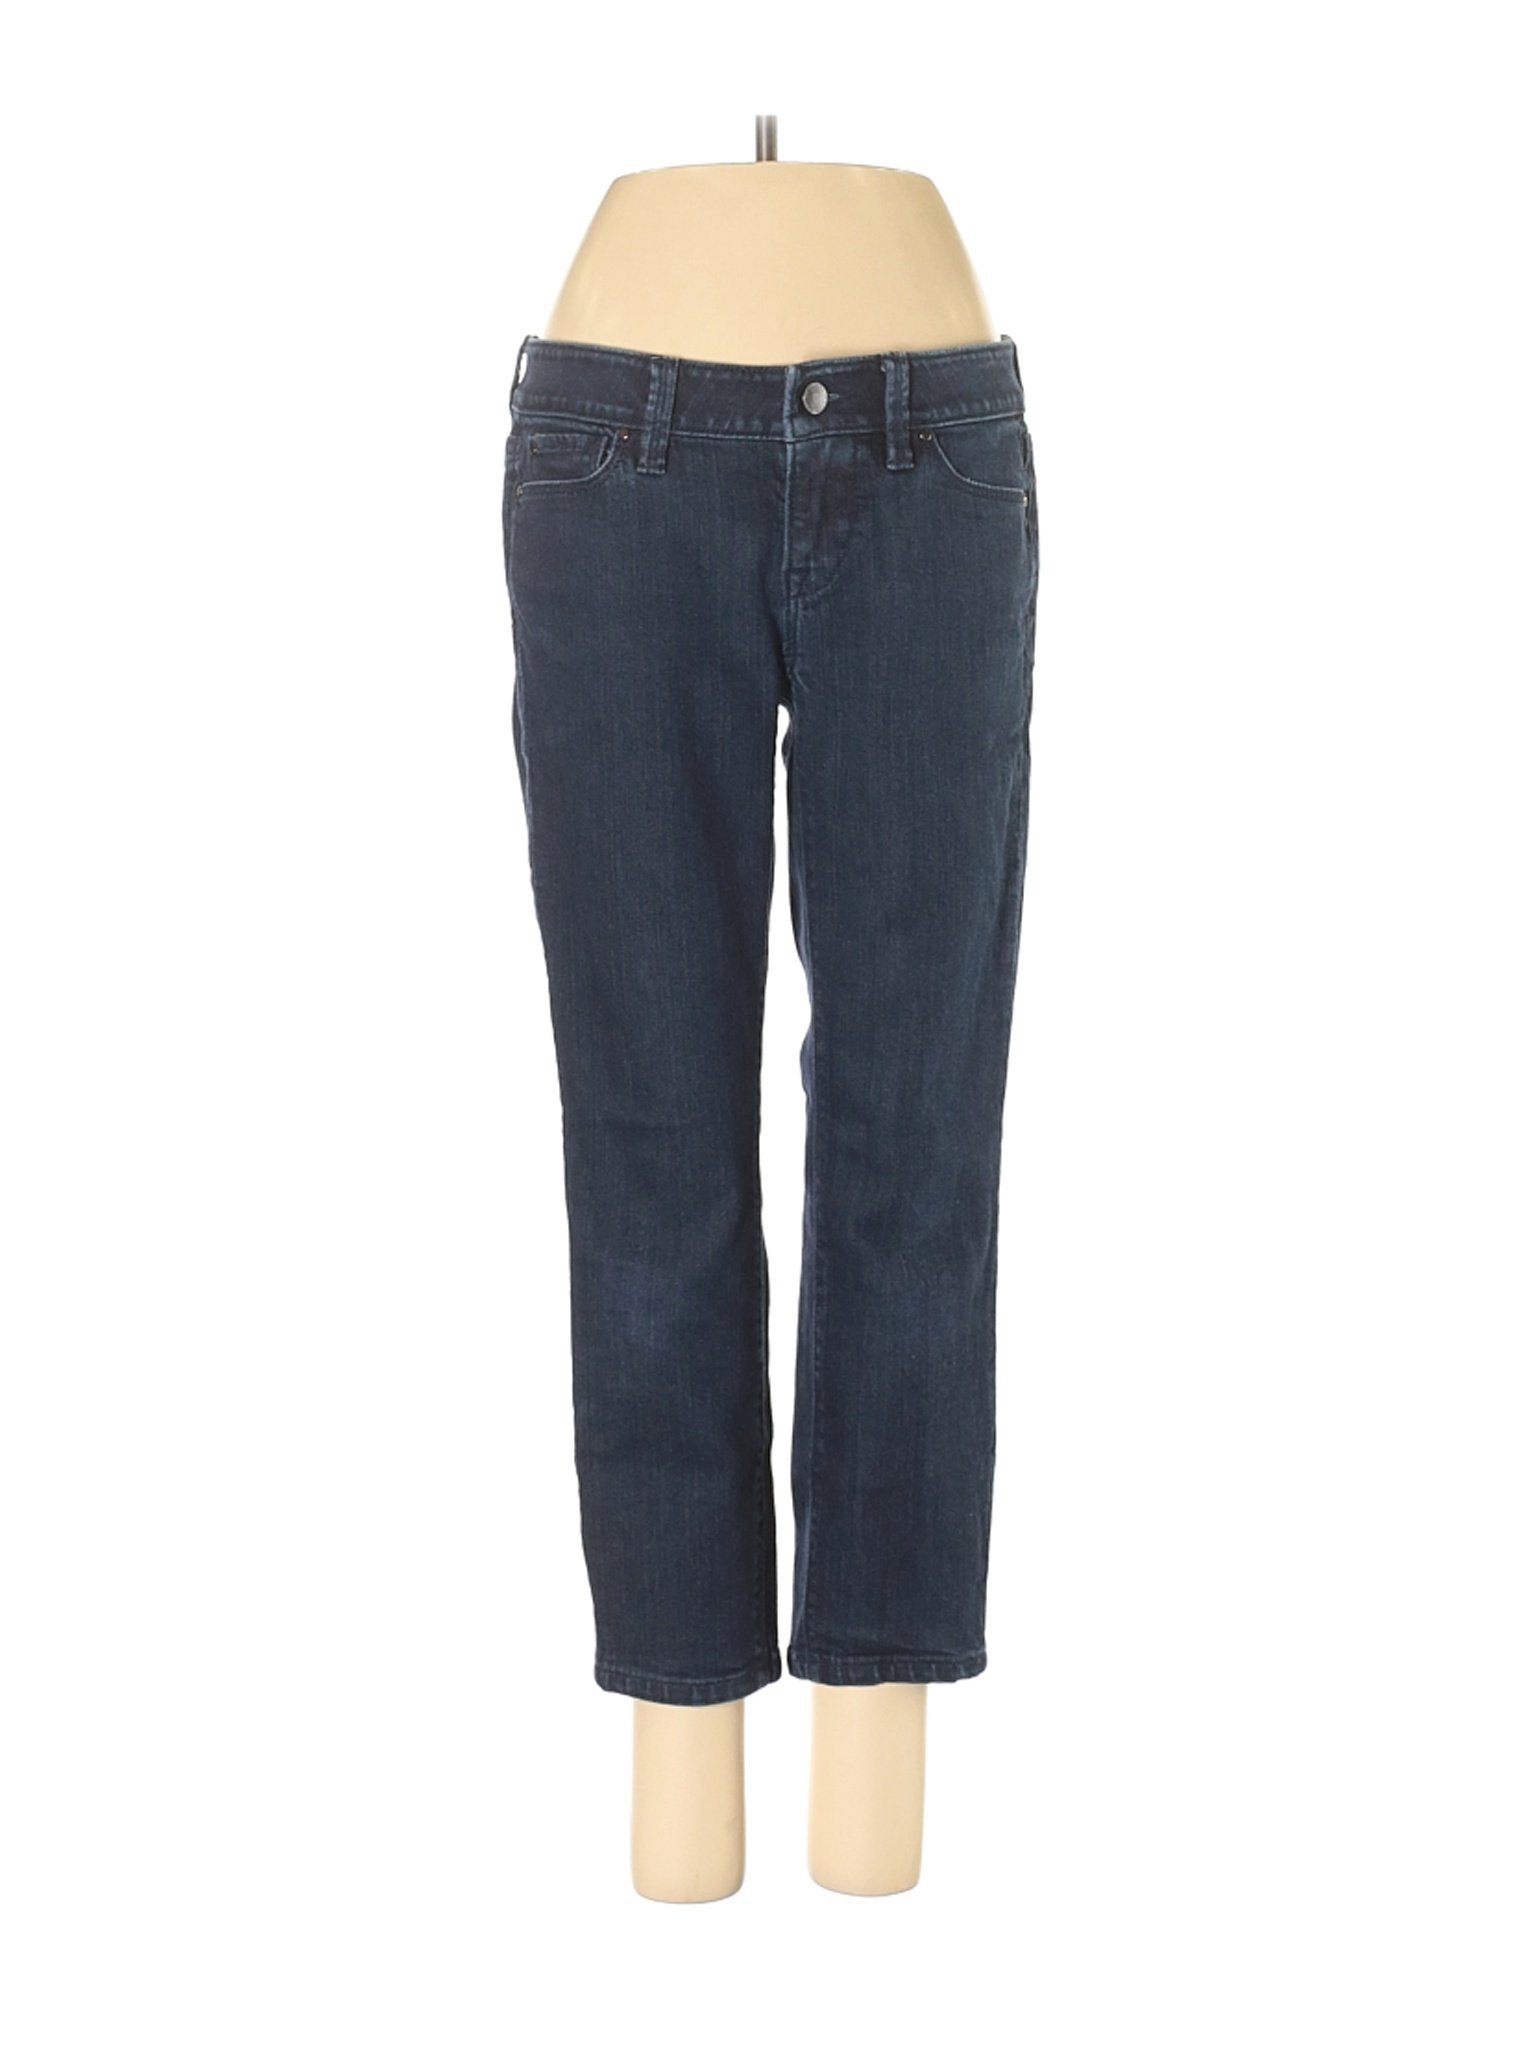 Ann Taylor Factory Women Blue Jeans 0 Petites | eBay